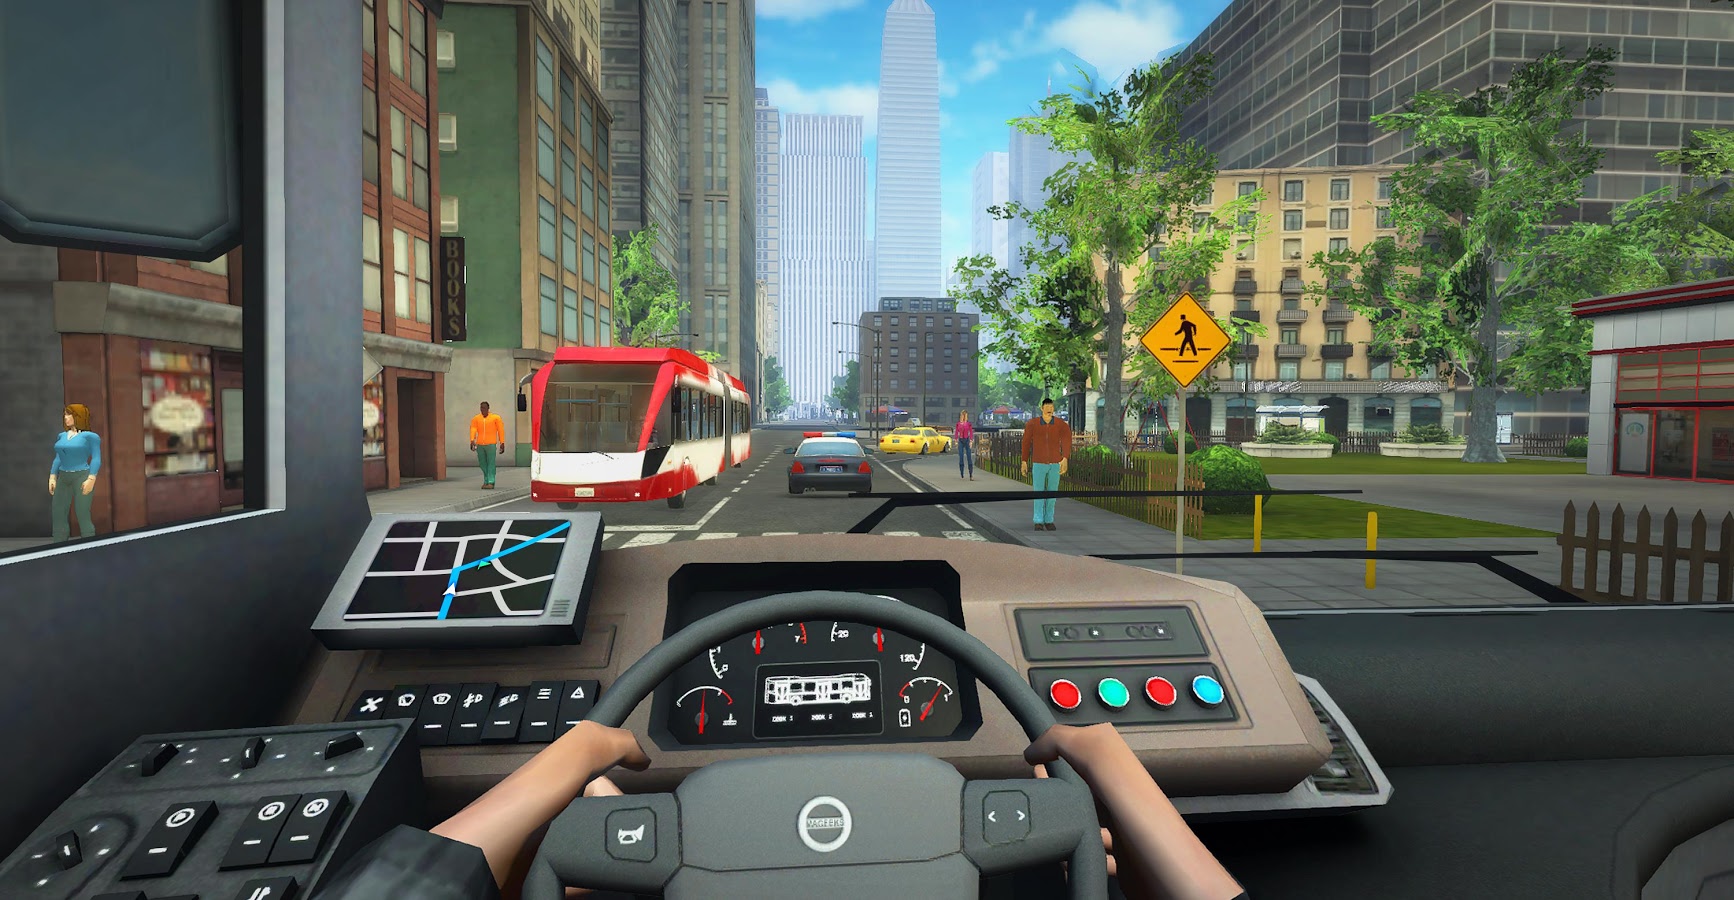 free bus simulator games online